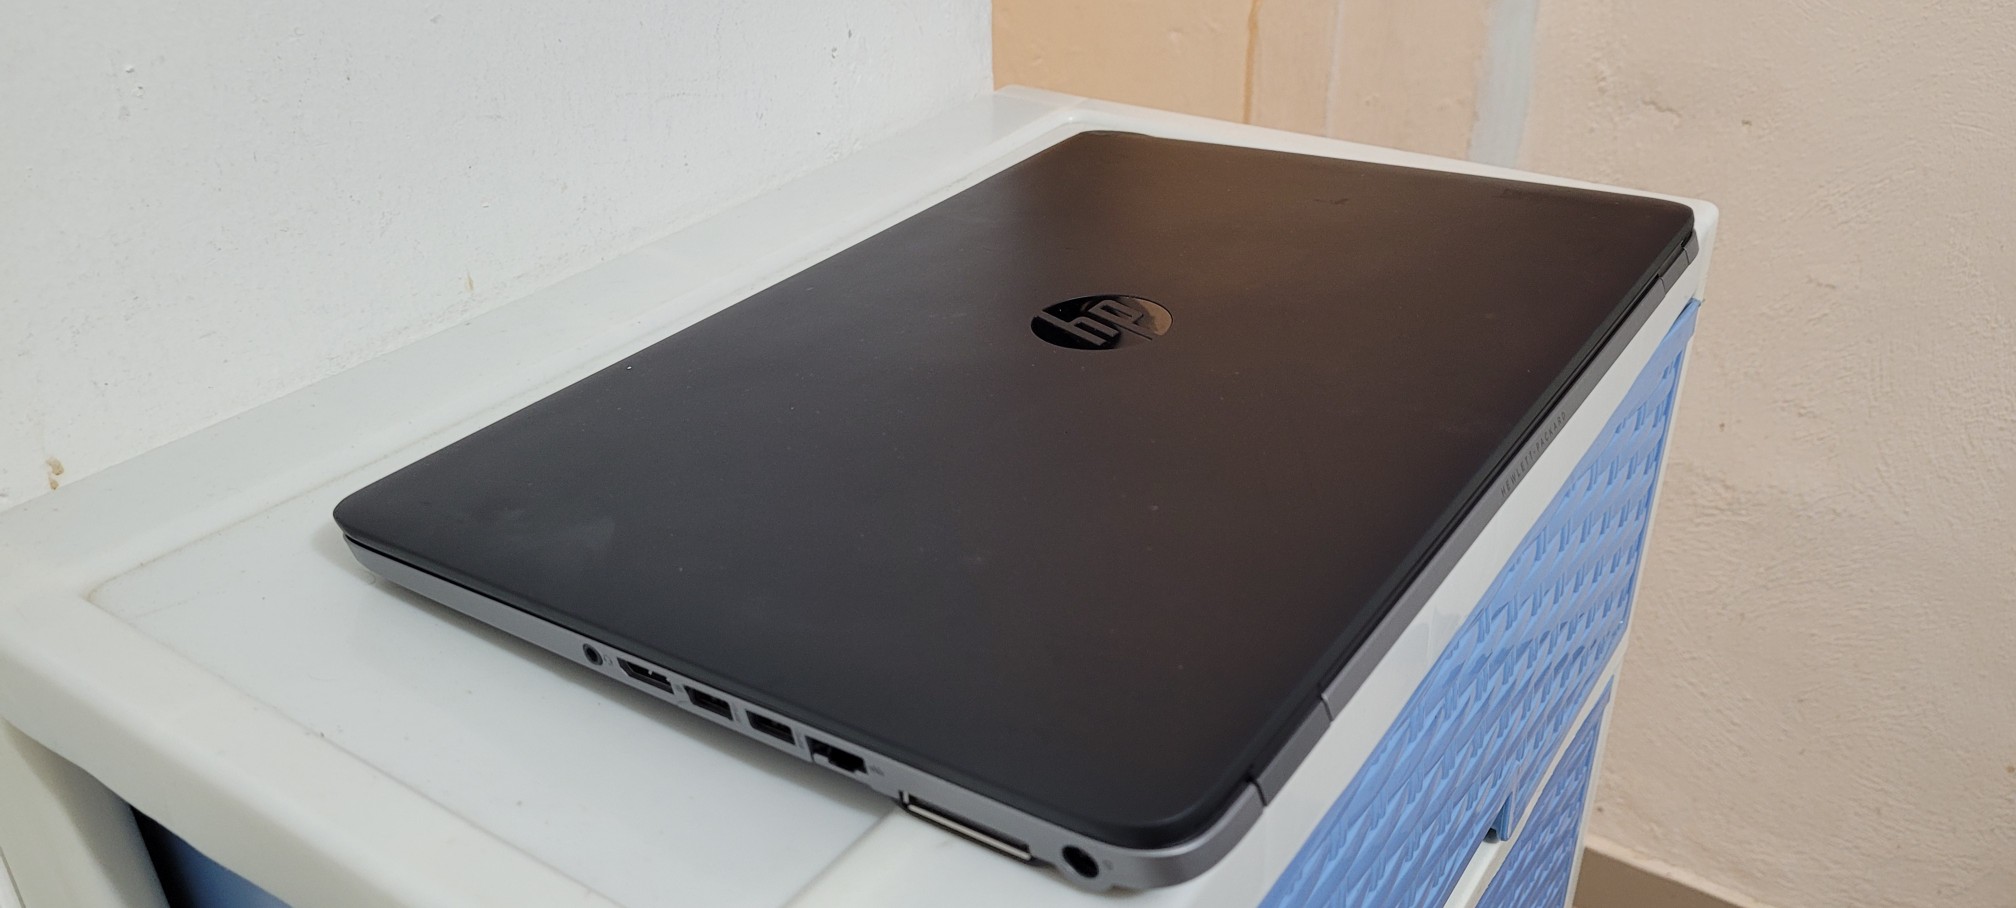 computadoras y laptops - Laptop hp 17 Pulg Core i5 Ram 8gb Disco 256gb SSD Video 4gb 2